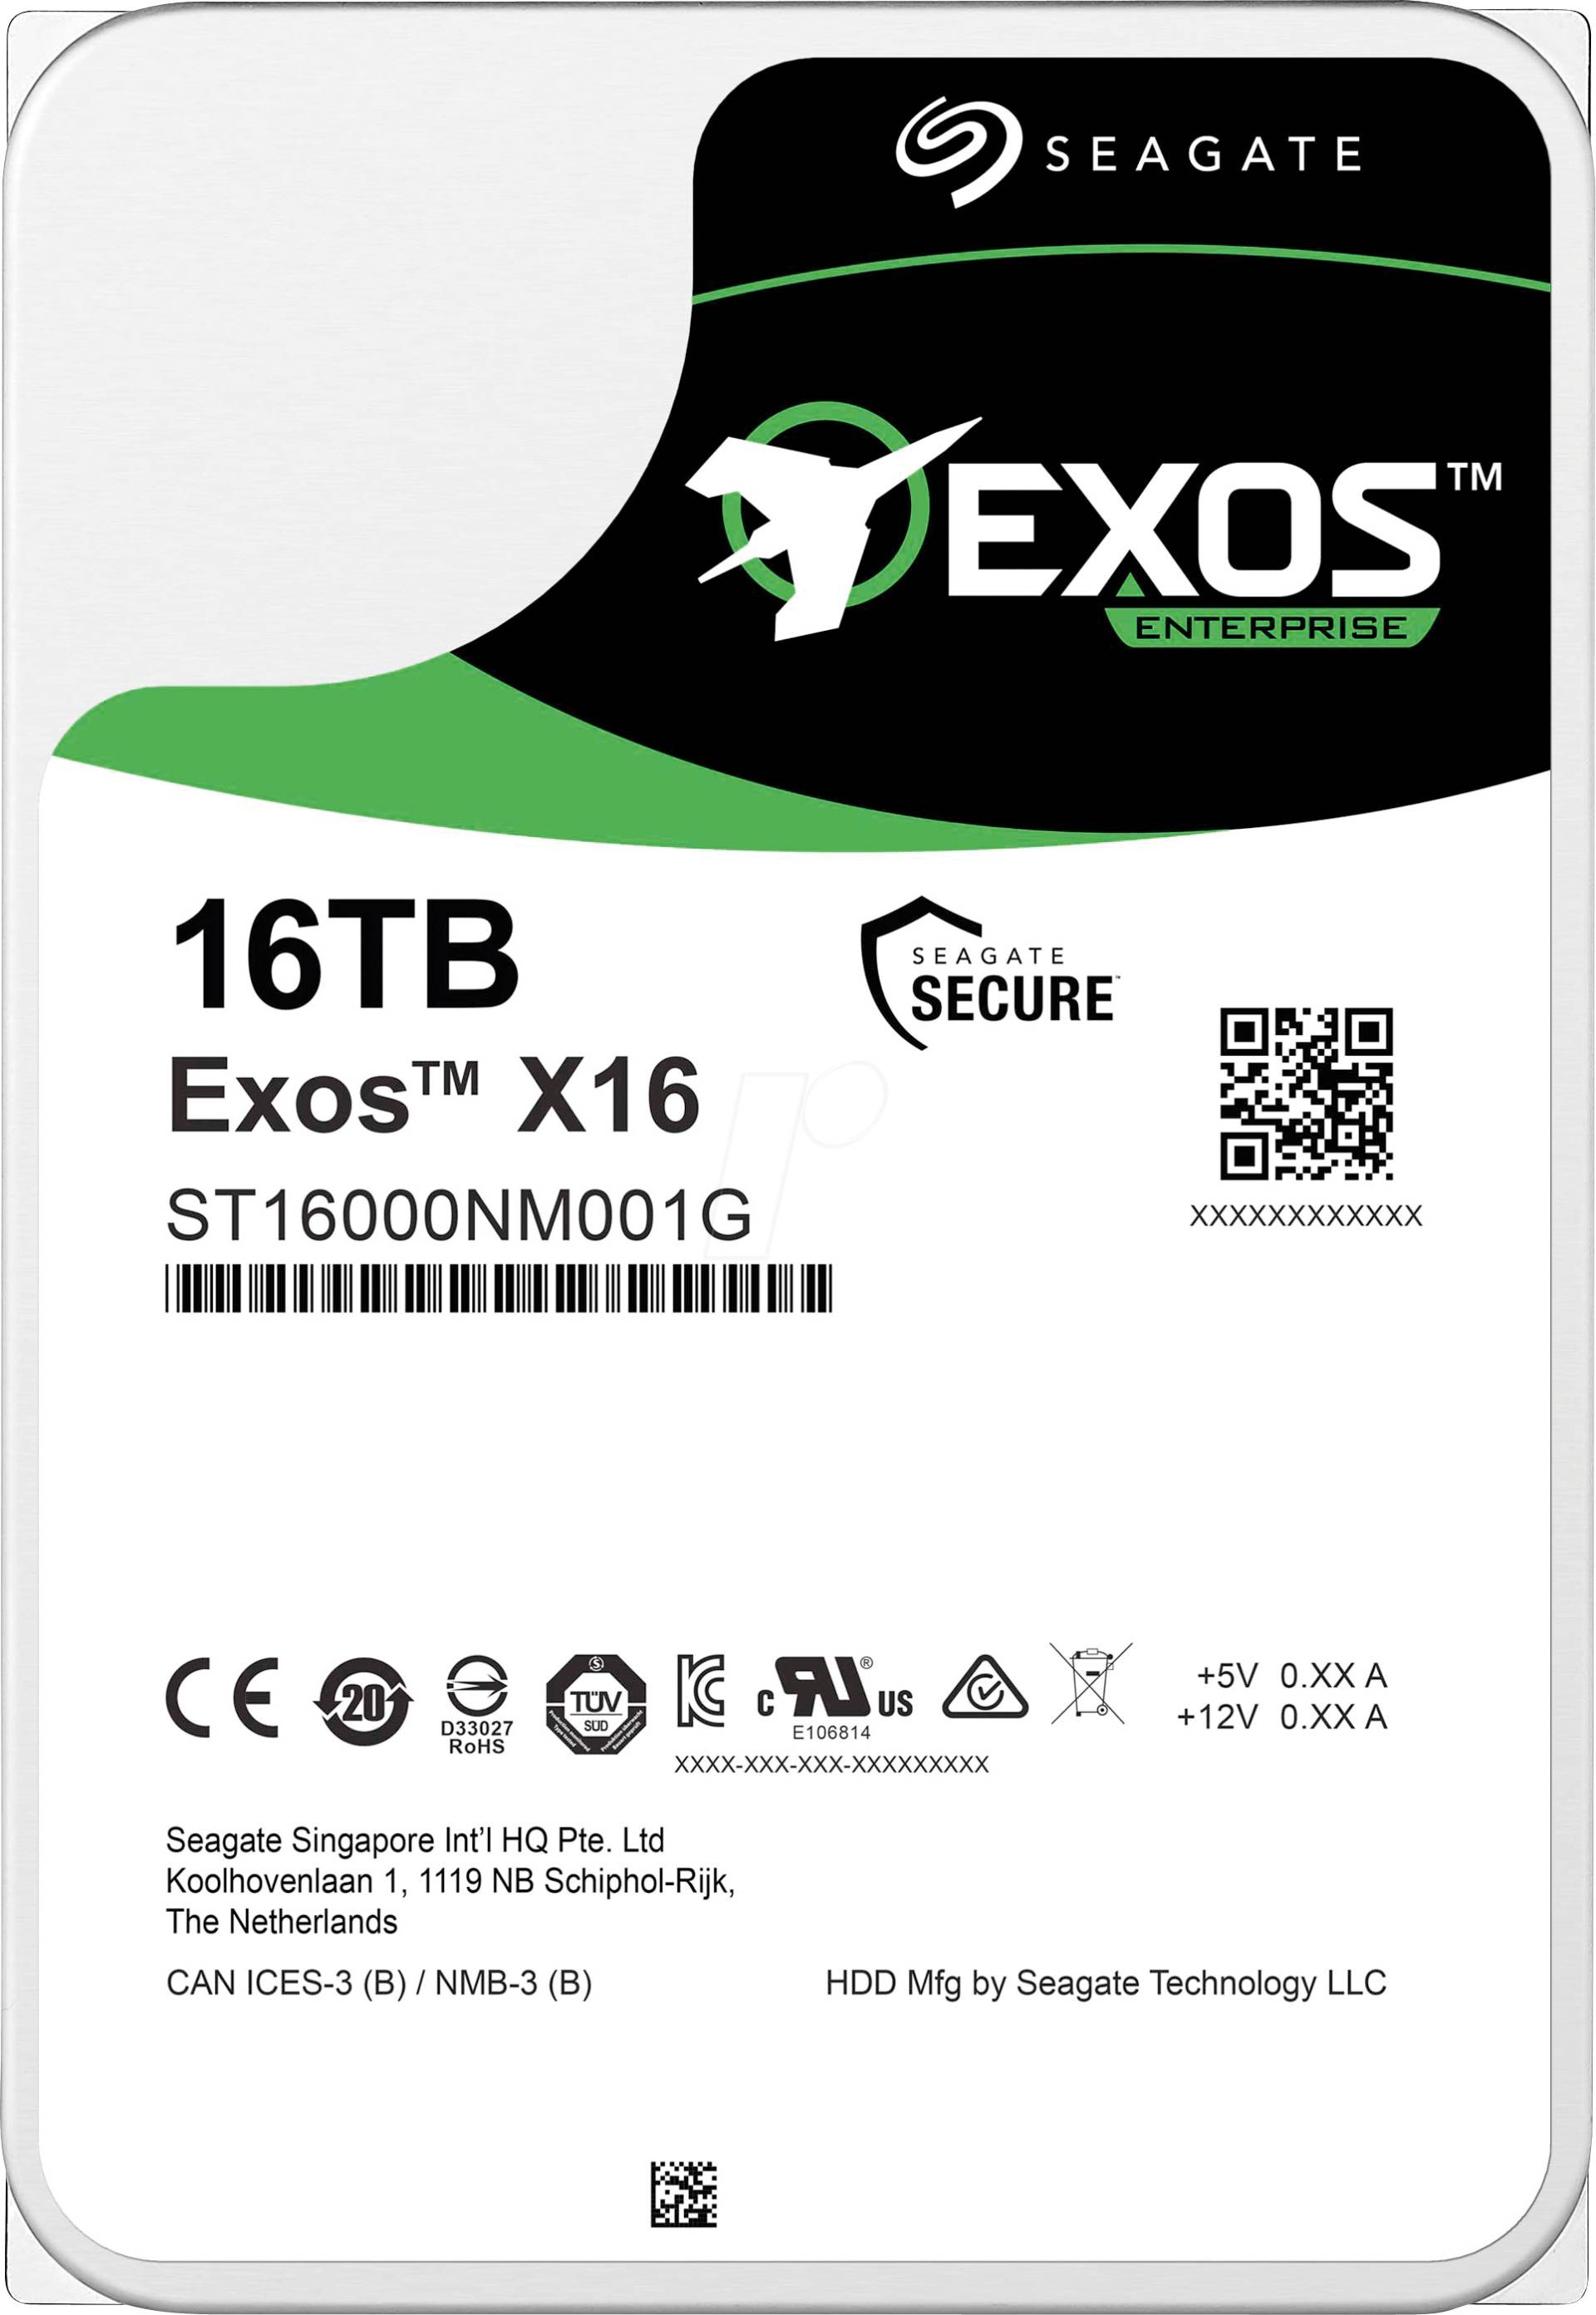 ST16000NM001G - 16TB Festplatte Seagate Exos X16 von Seagate